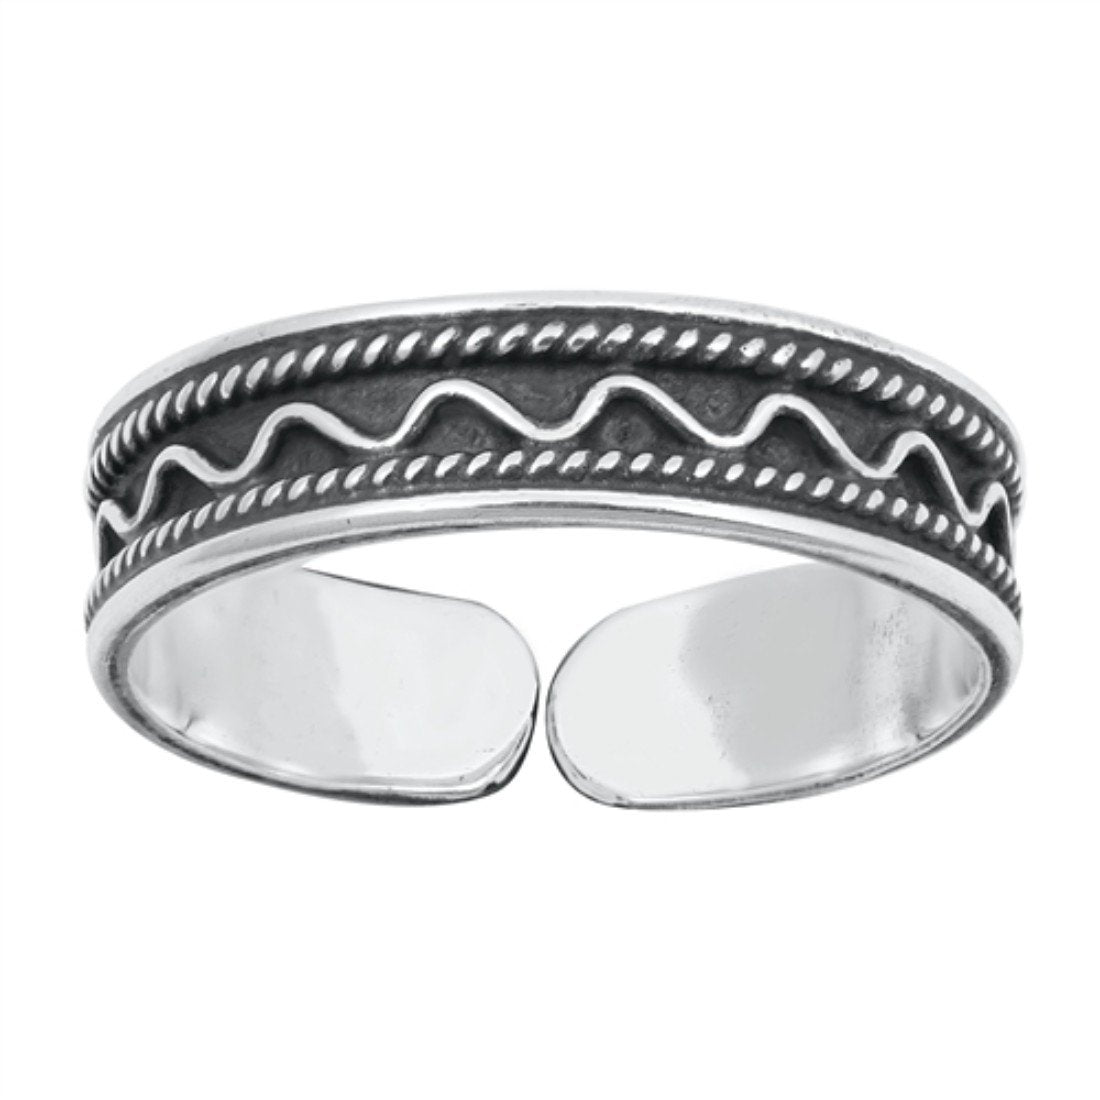 Silver Bali Design Toe Ring Adjustable Band 925 Sterling Silver (4mm)